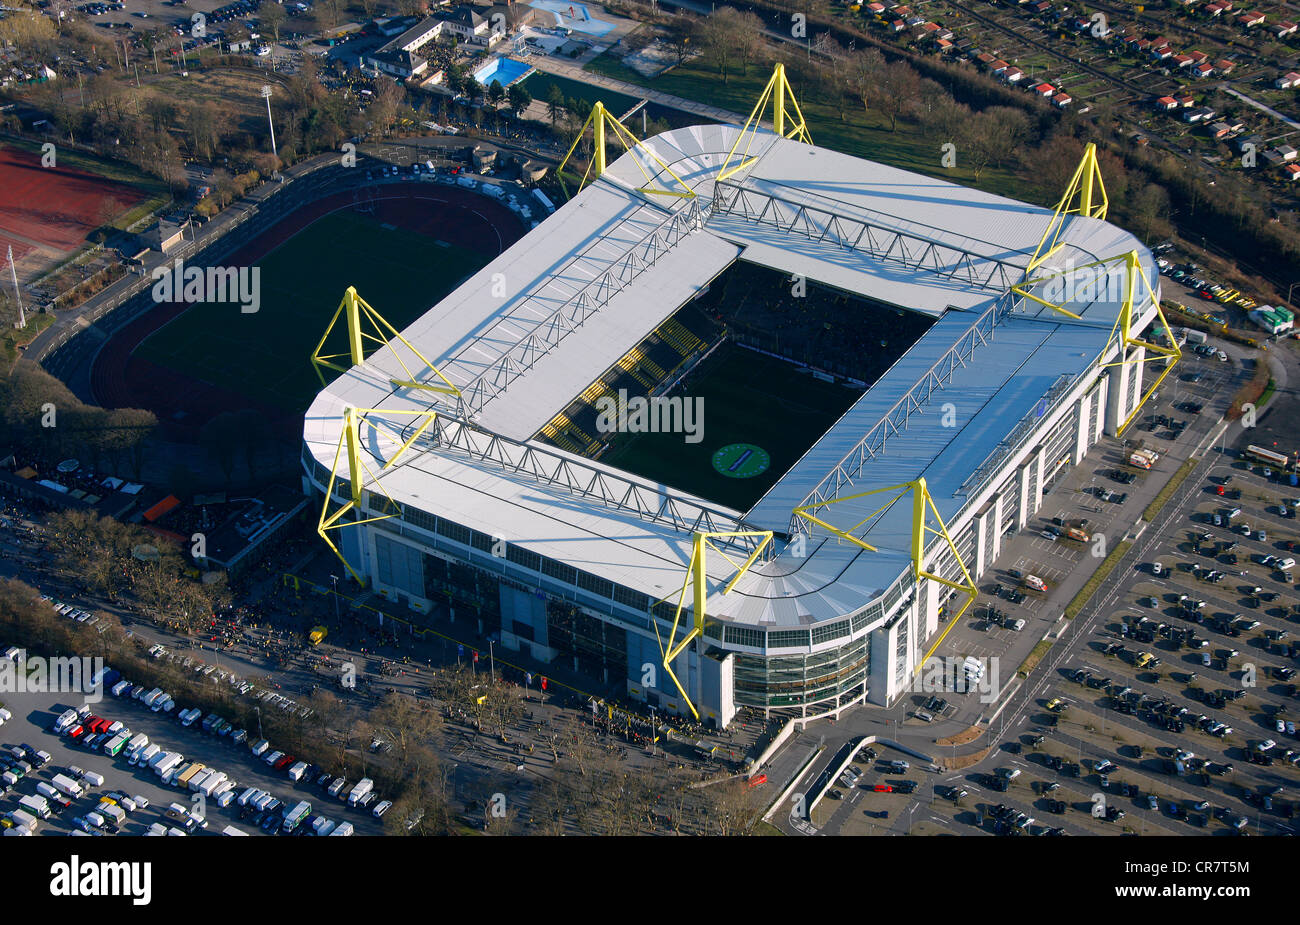 Aerial view, Signal Iduna Park stadium, Dortmund, Ruhrgebiet region, North Rhine-Westphalia, Germany, Europe Stock Photo